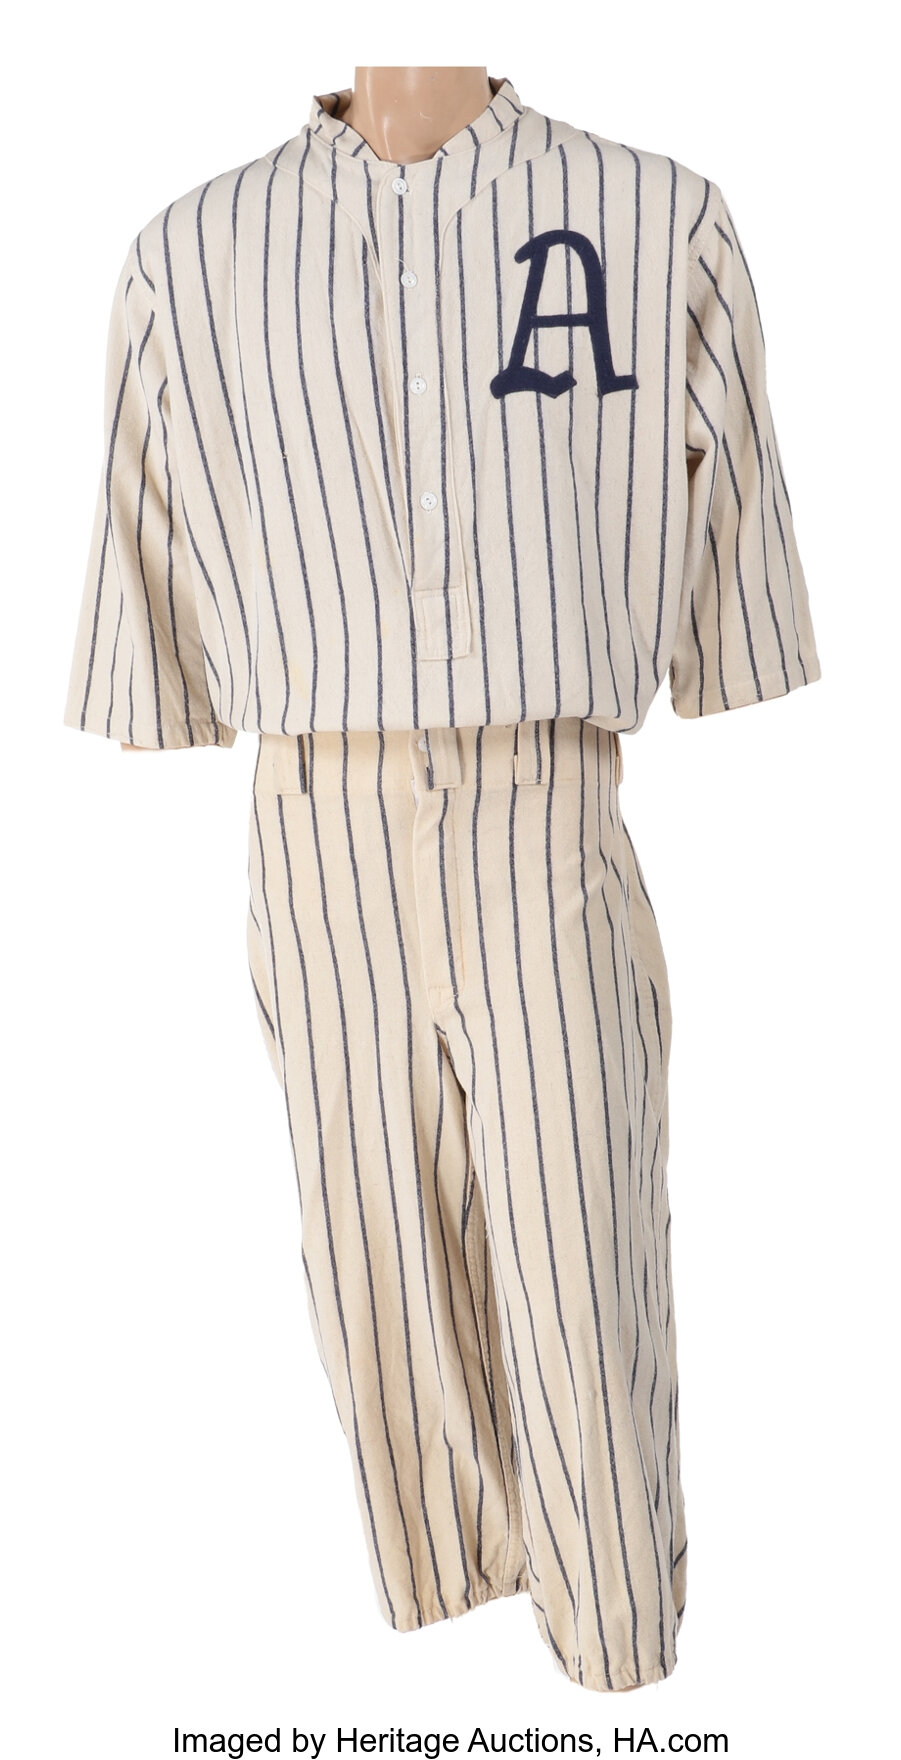 Tommy Lee Jones Ty Cobb Philadelphia Athletics uniform from, Lot #2830